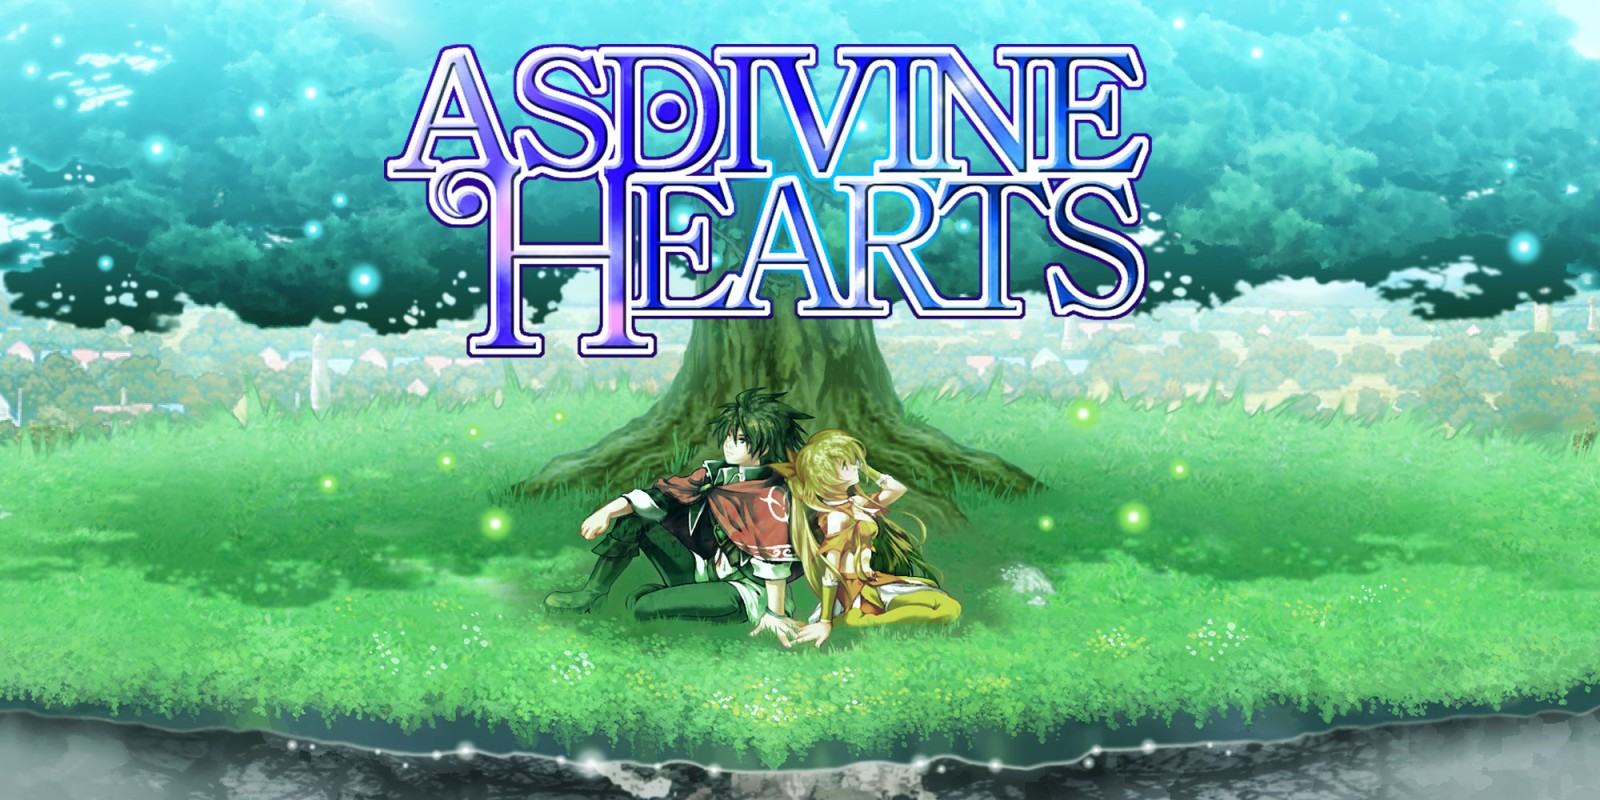 Asdivine Hearts